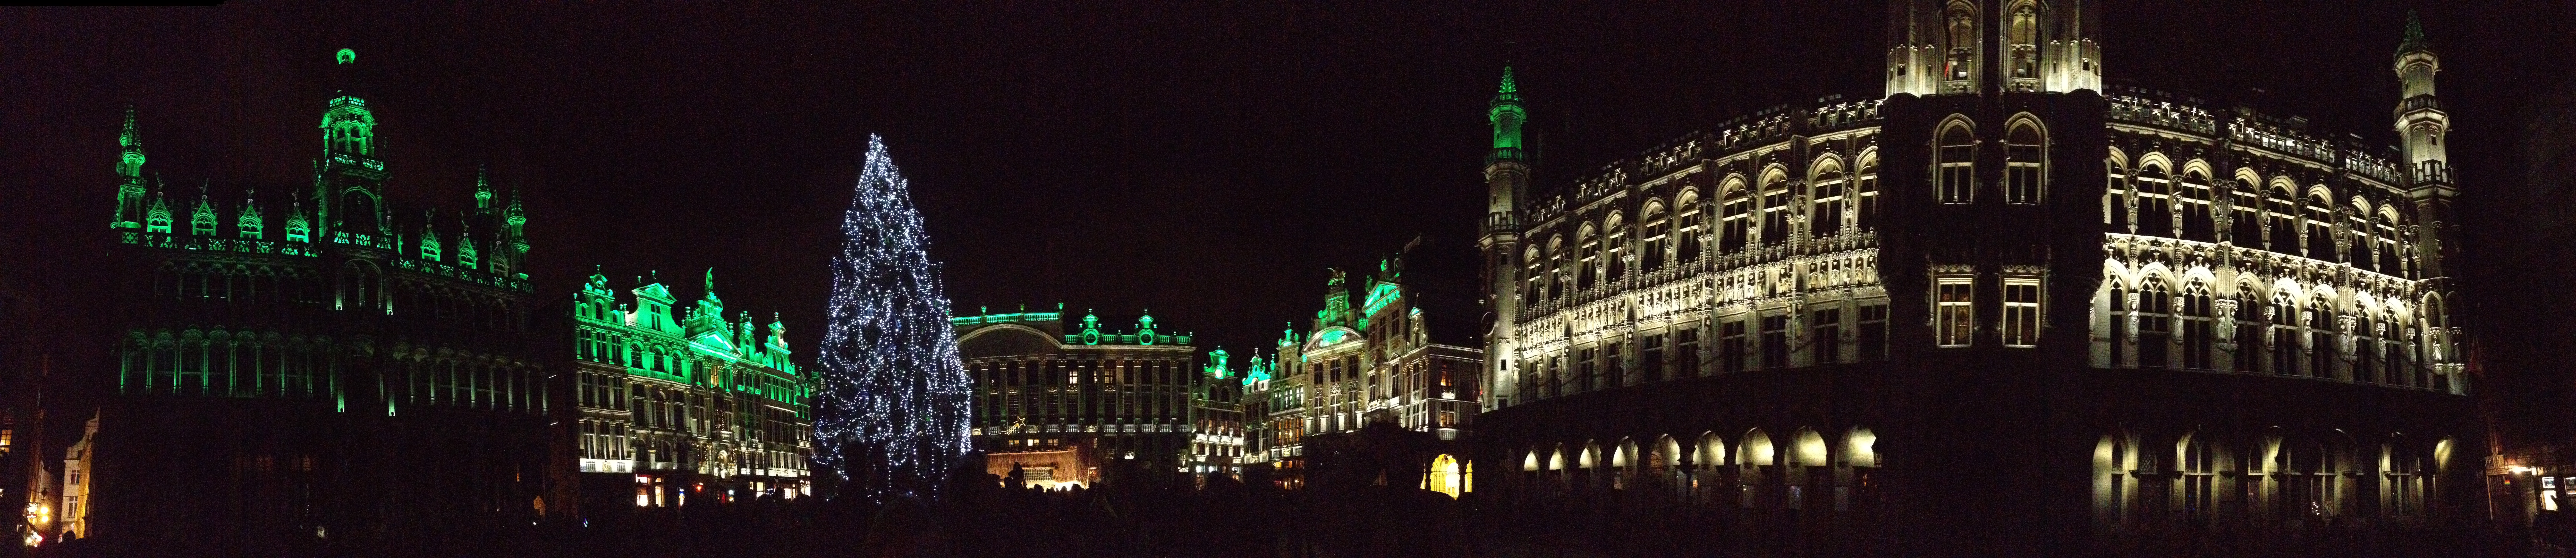 Brussels_Belgium_Lights